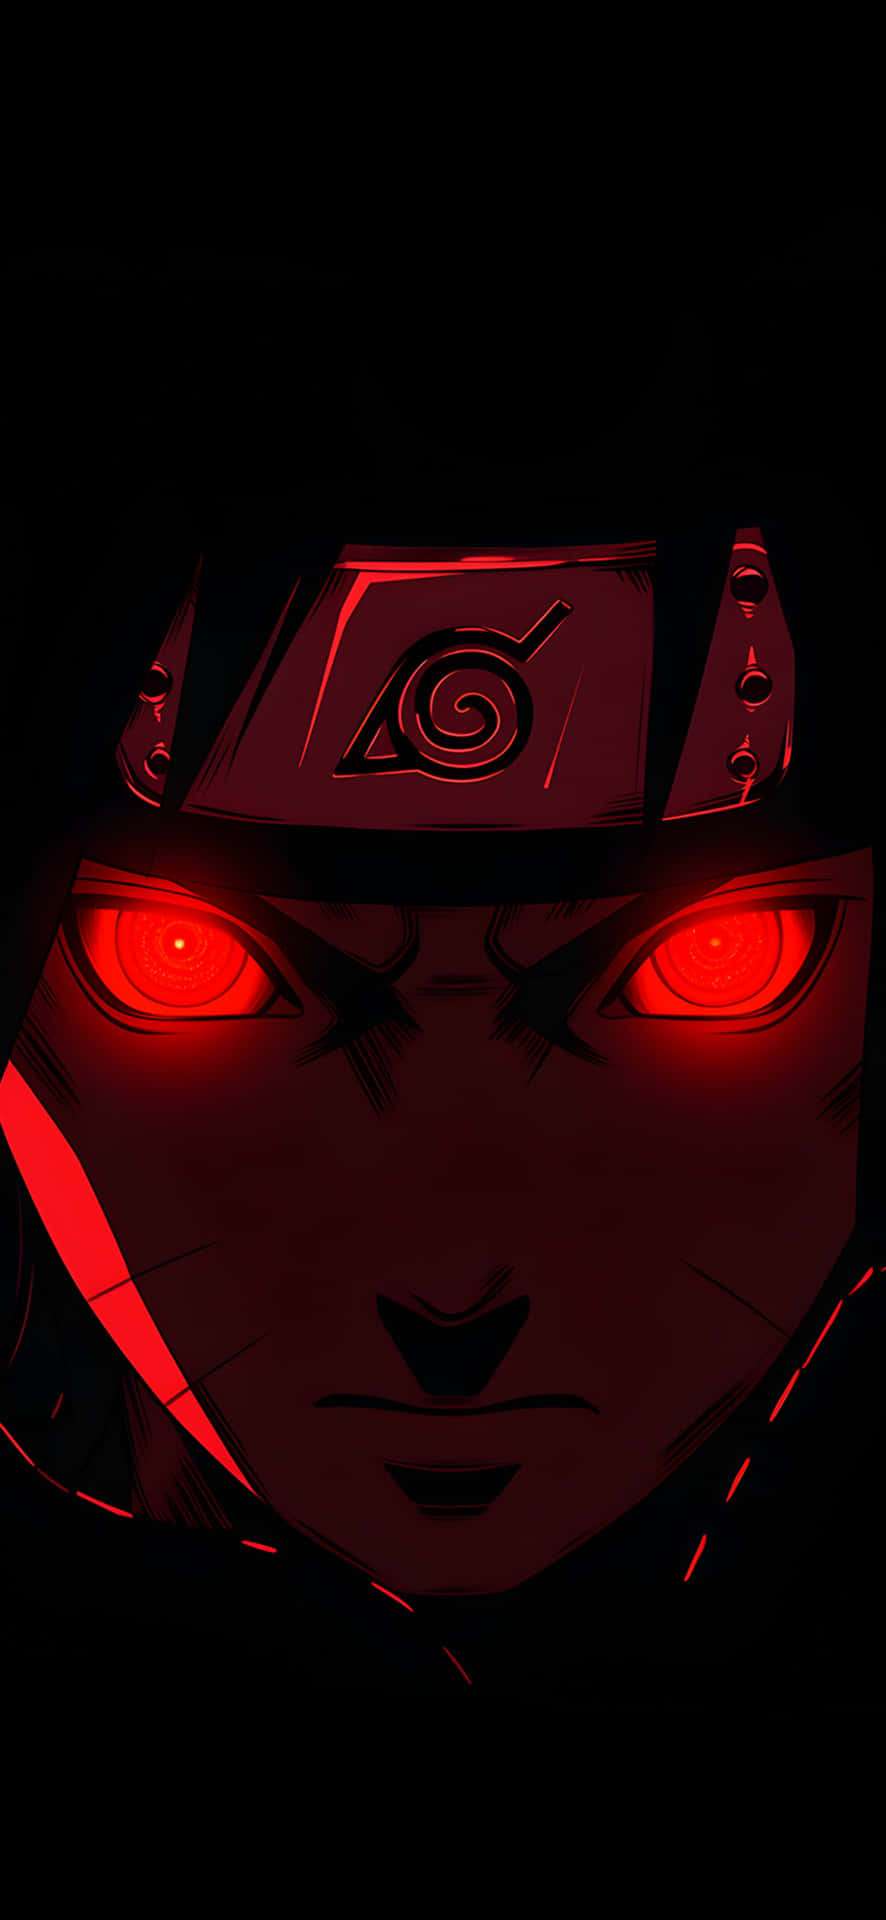 Red Eyed Ninja In Darkness Wallpaper